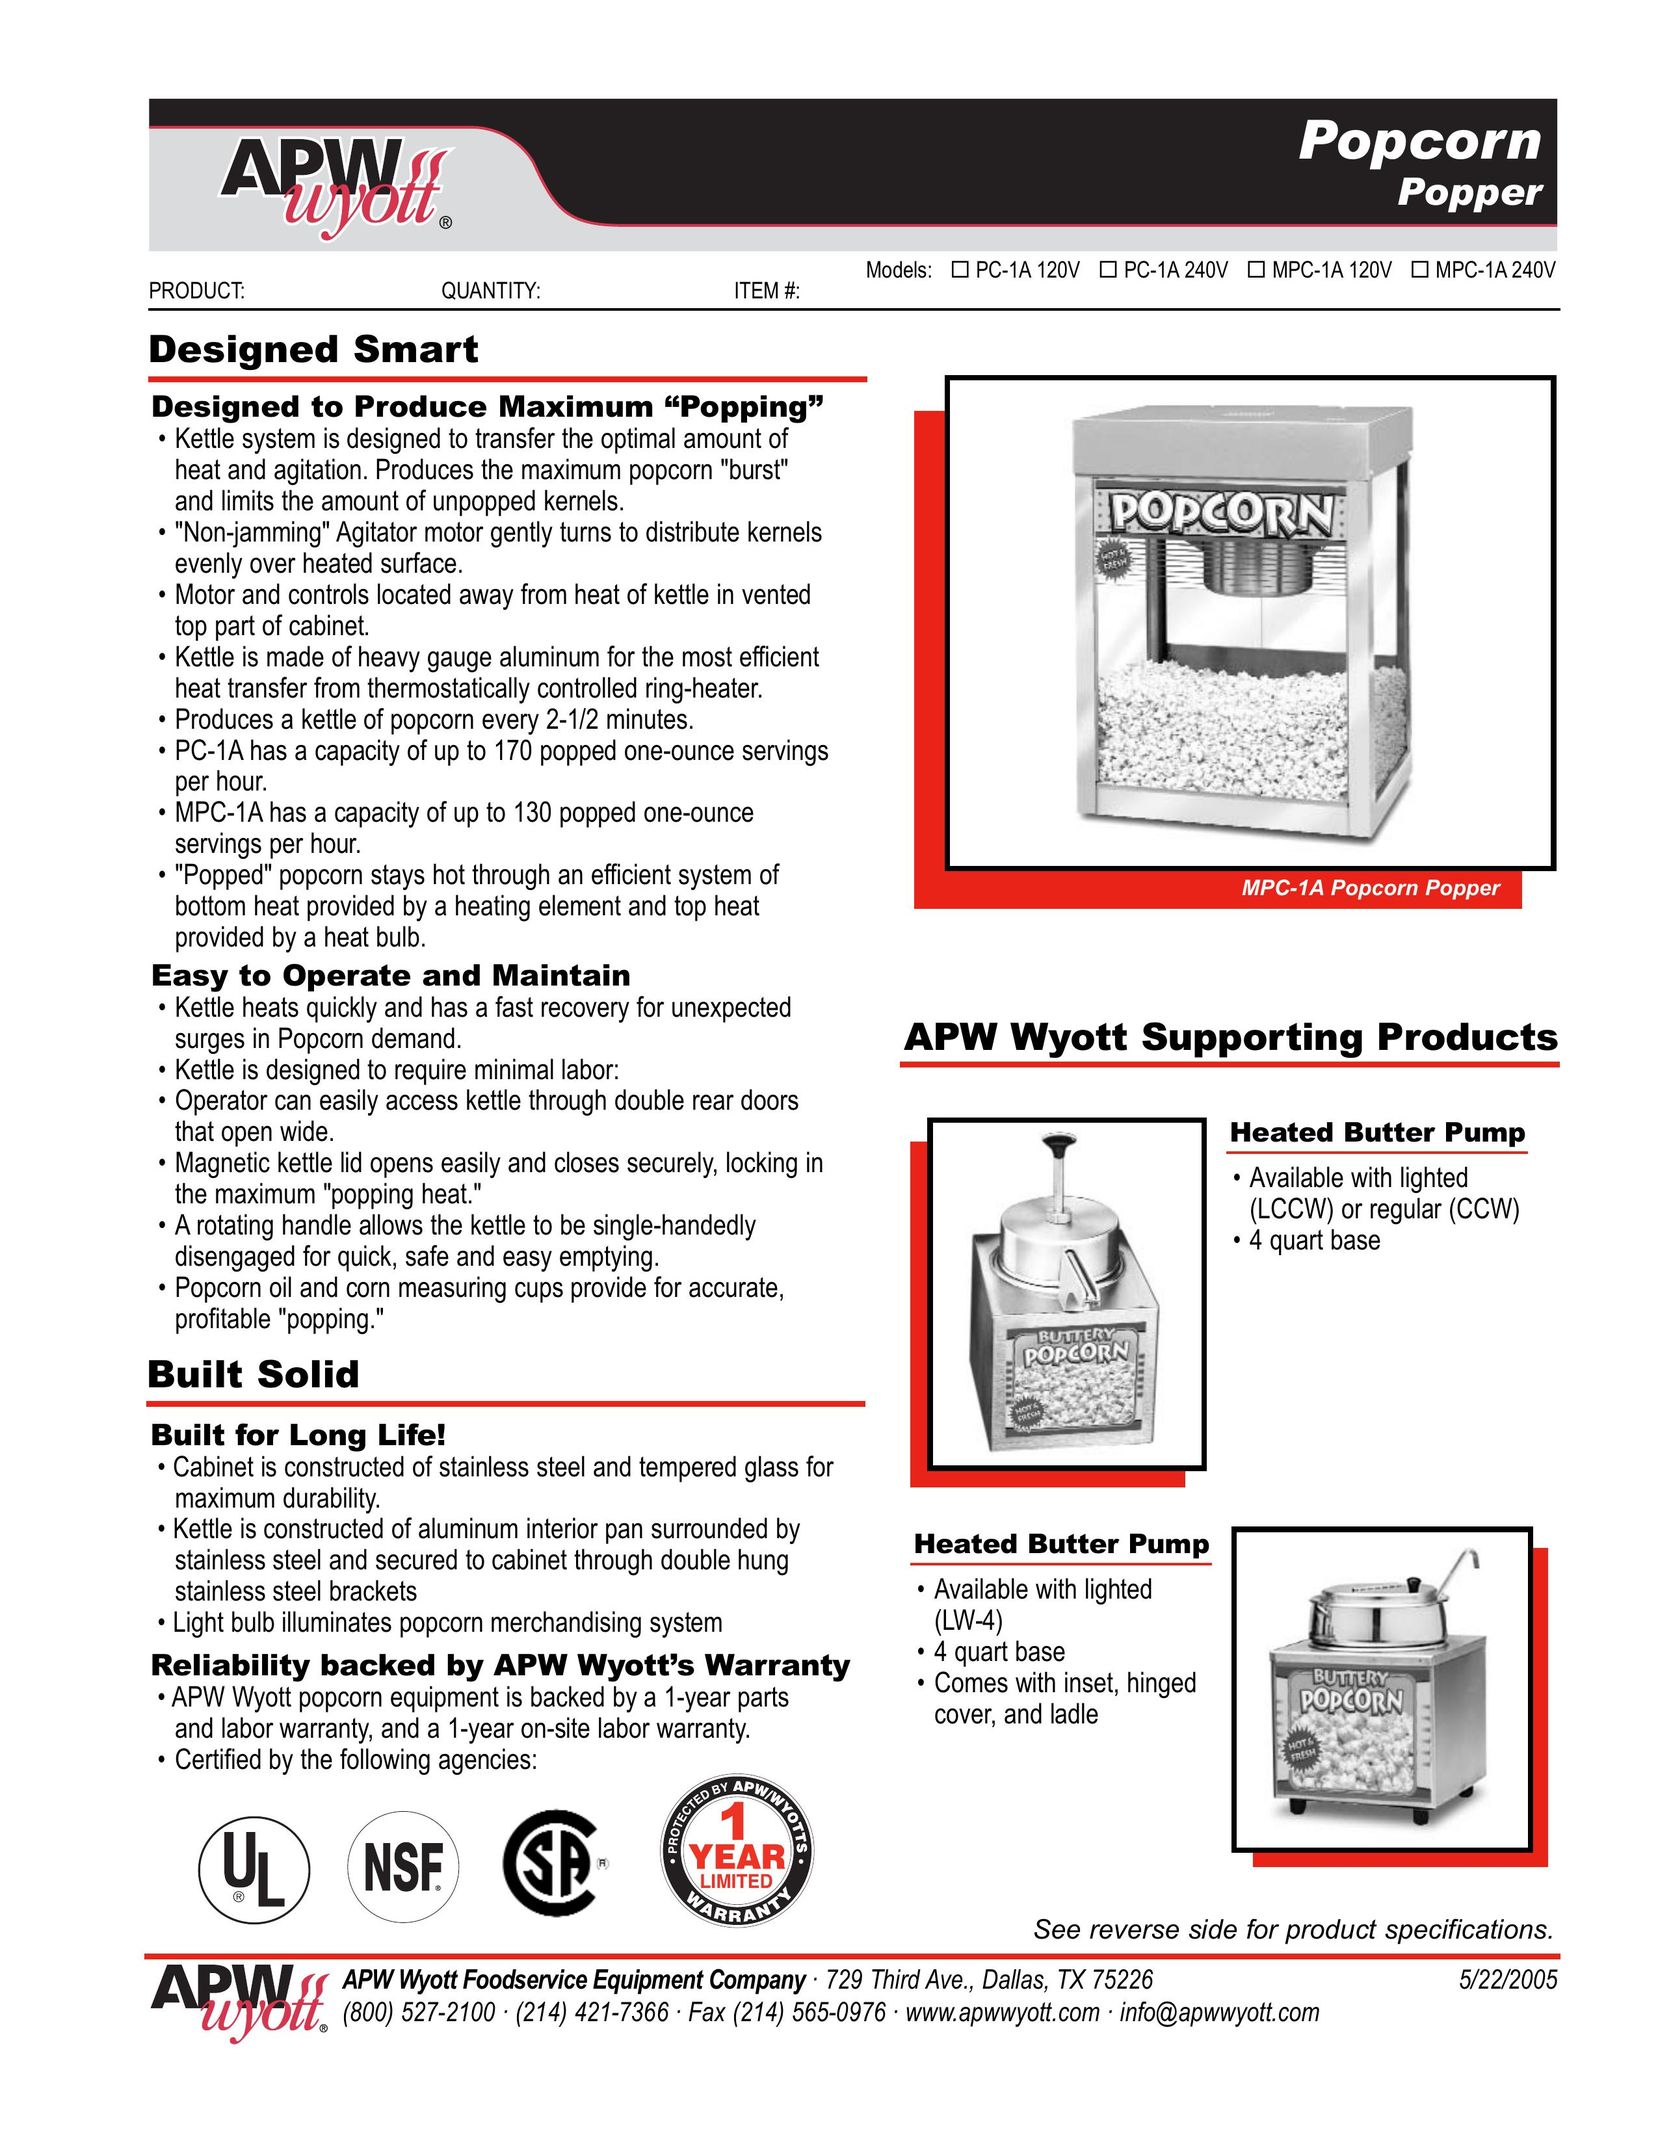 APW Wyott PC-1A 240V Popcorn Poppers User Manual